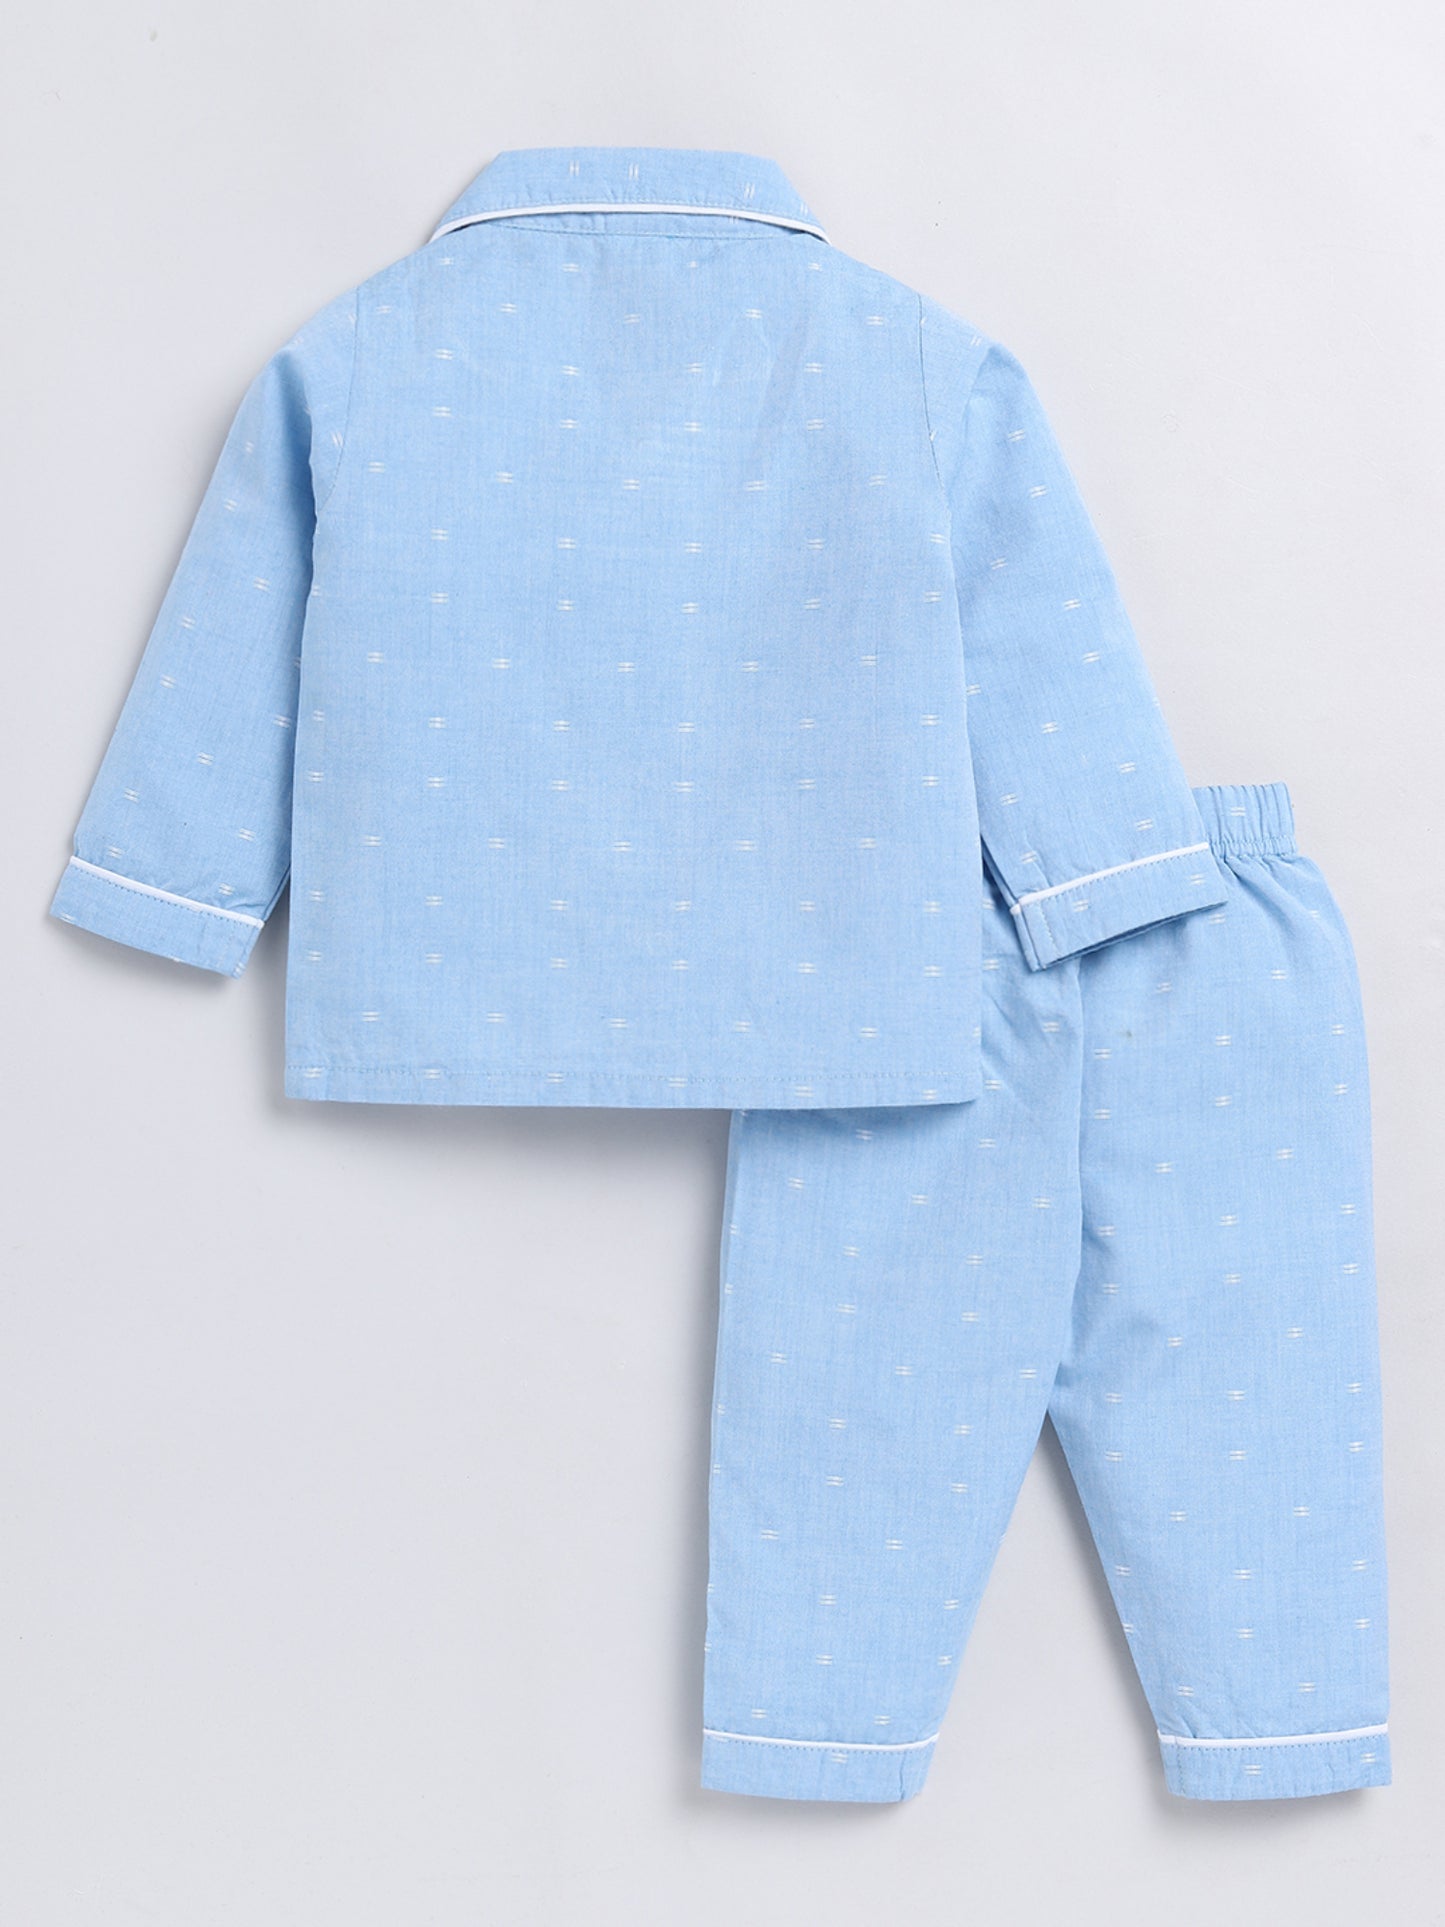 Classic Blue Full Sleeve Nightwear Set